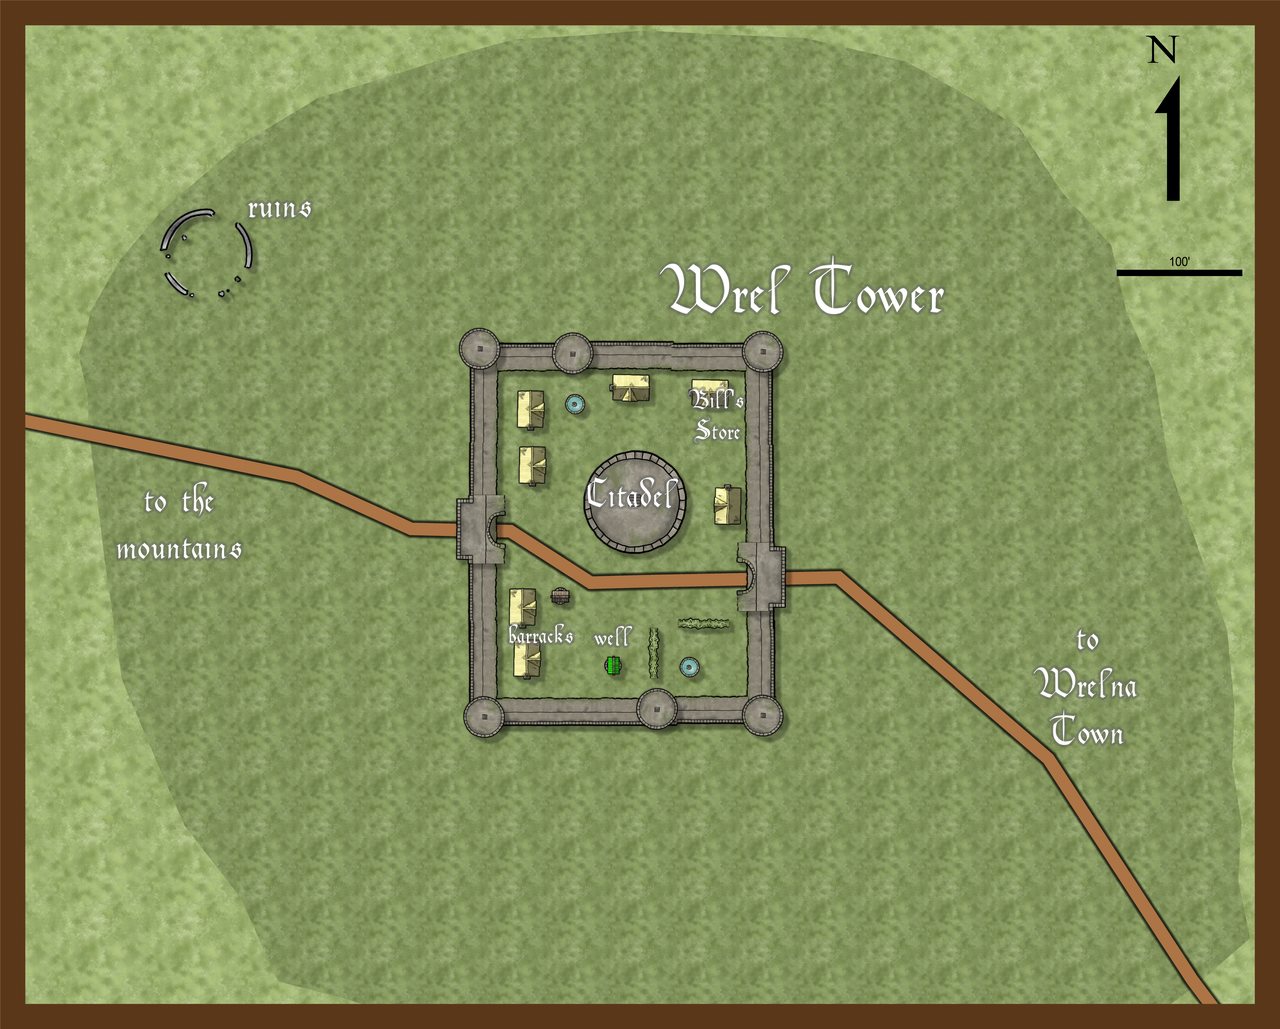 Nibirum Map: wrel tower by JimP